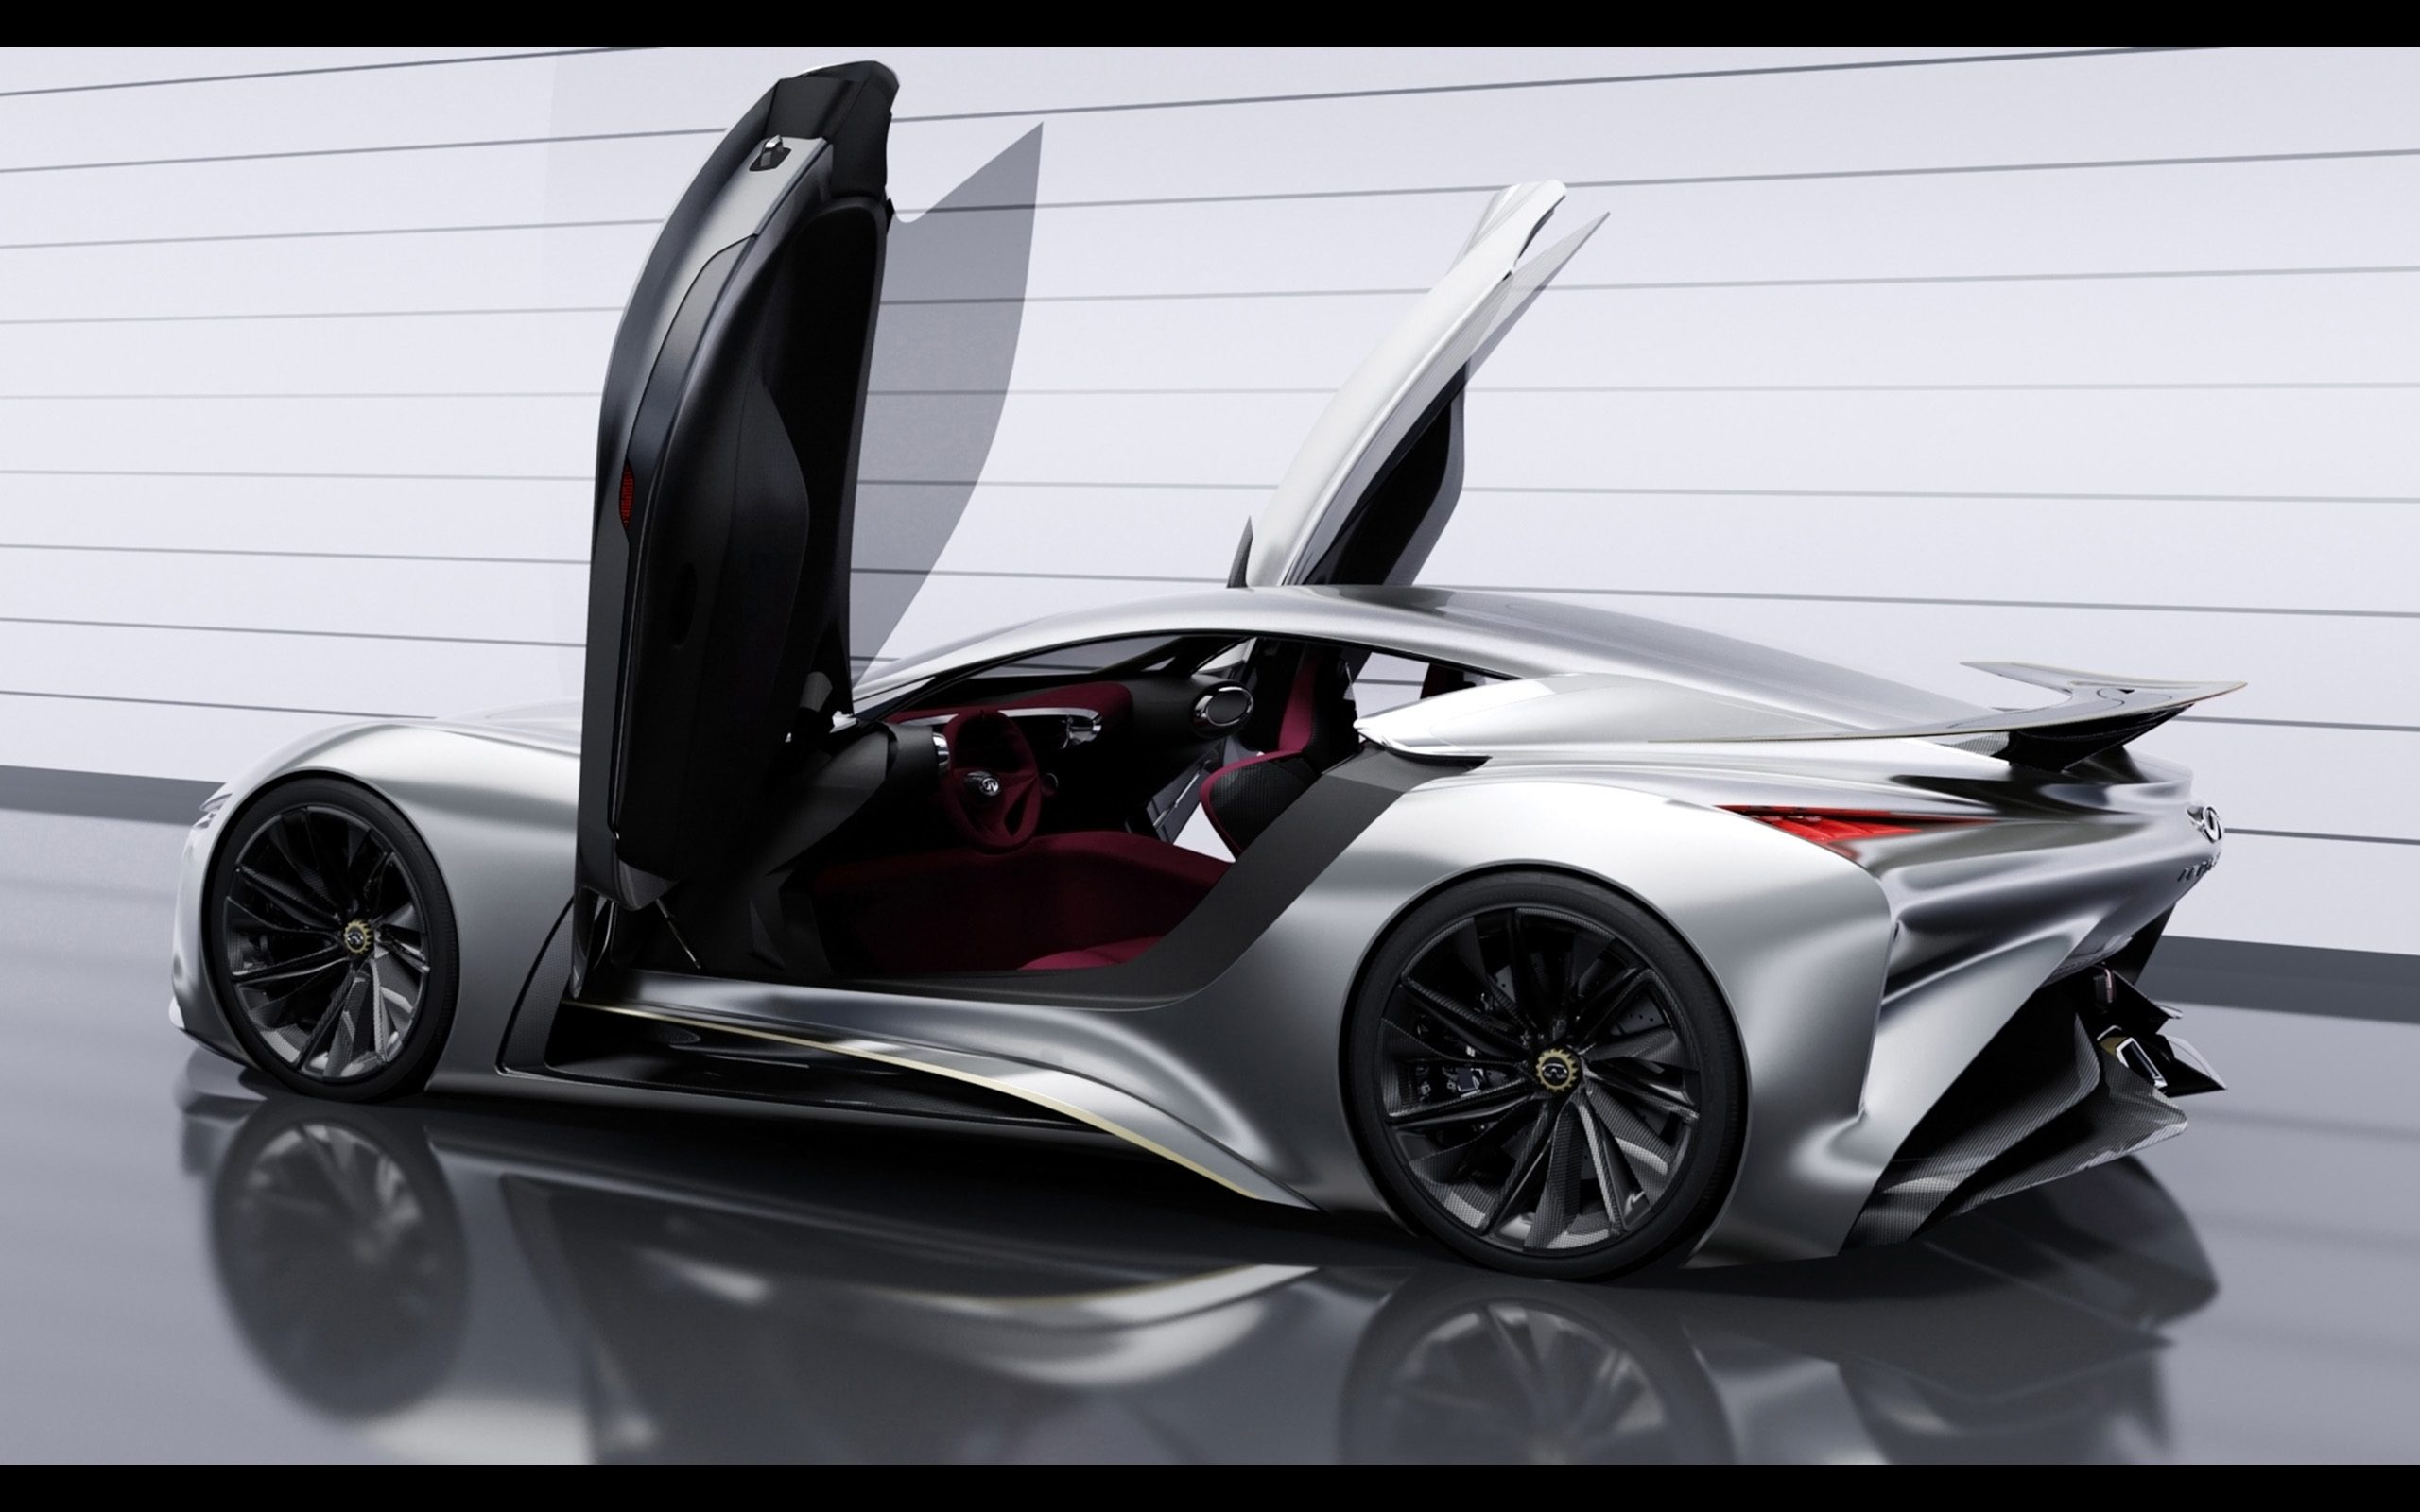 2014-Infiniti-Concept-Vision-Gran-Turismo-Studio-8-2560x1600.jpg